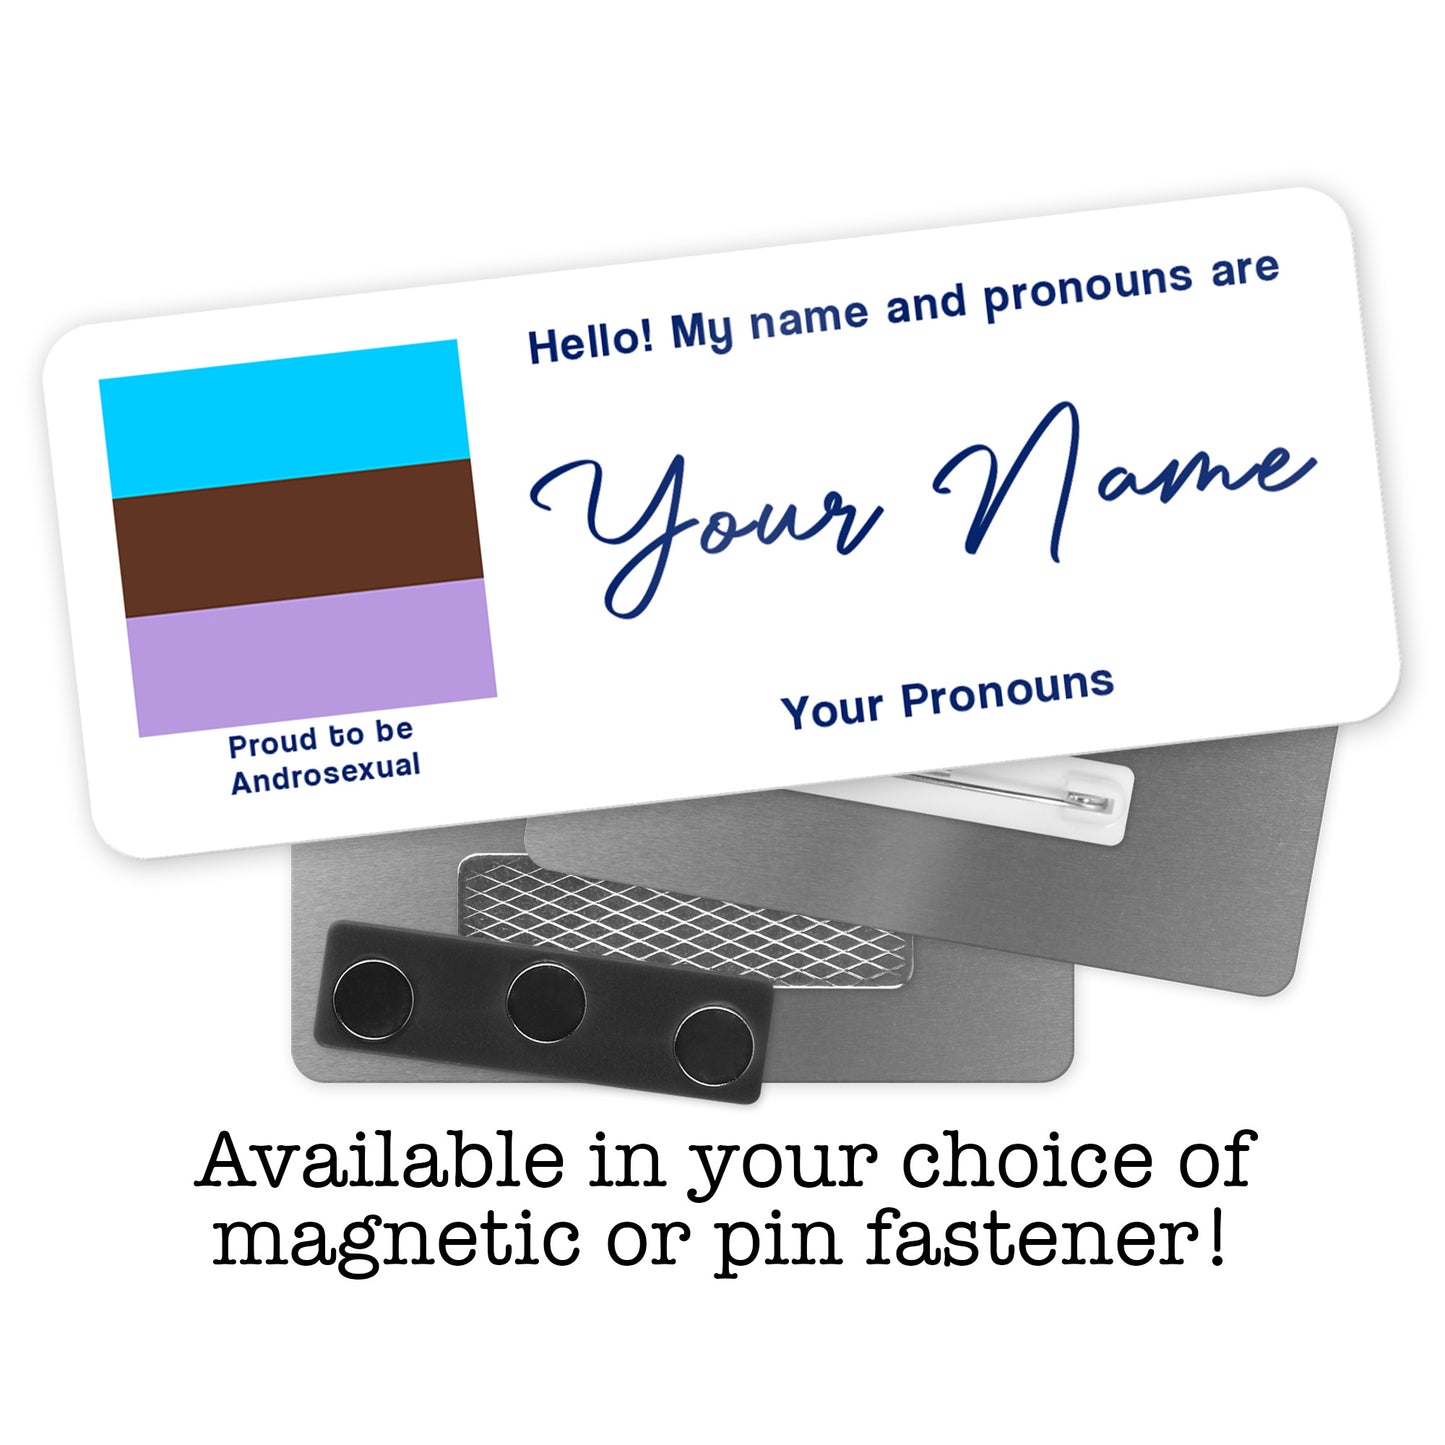 Androsexual pride personalised metal name tag or name badge personalised with name and pronouns